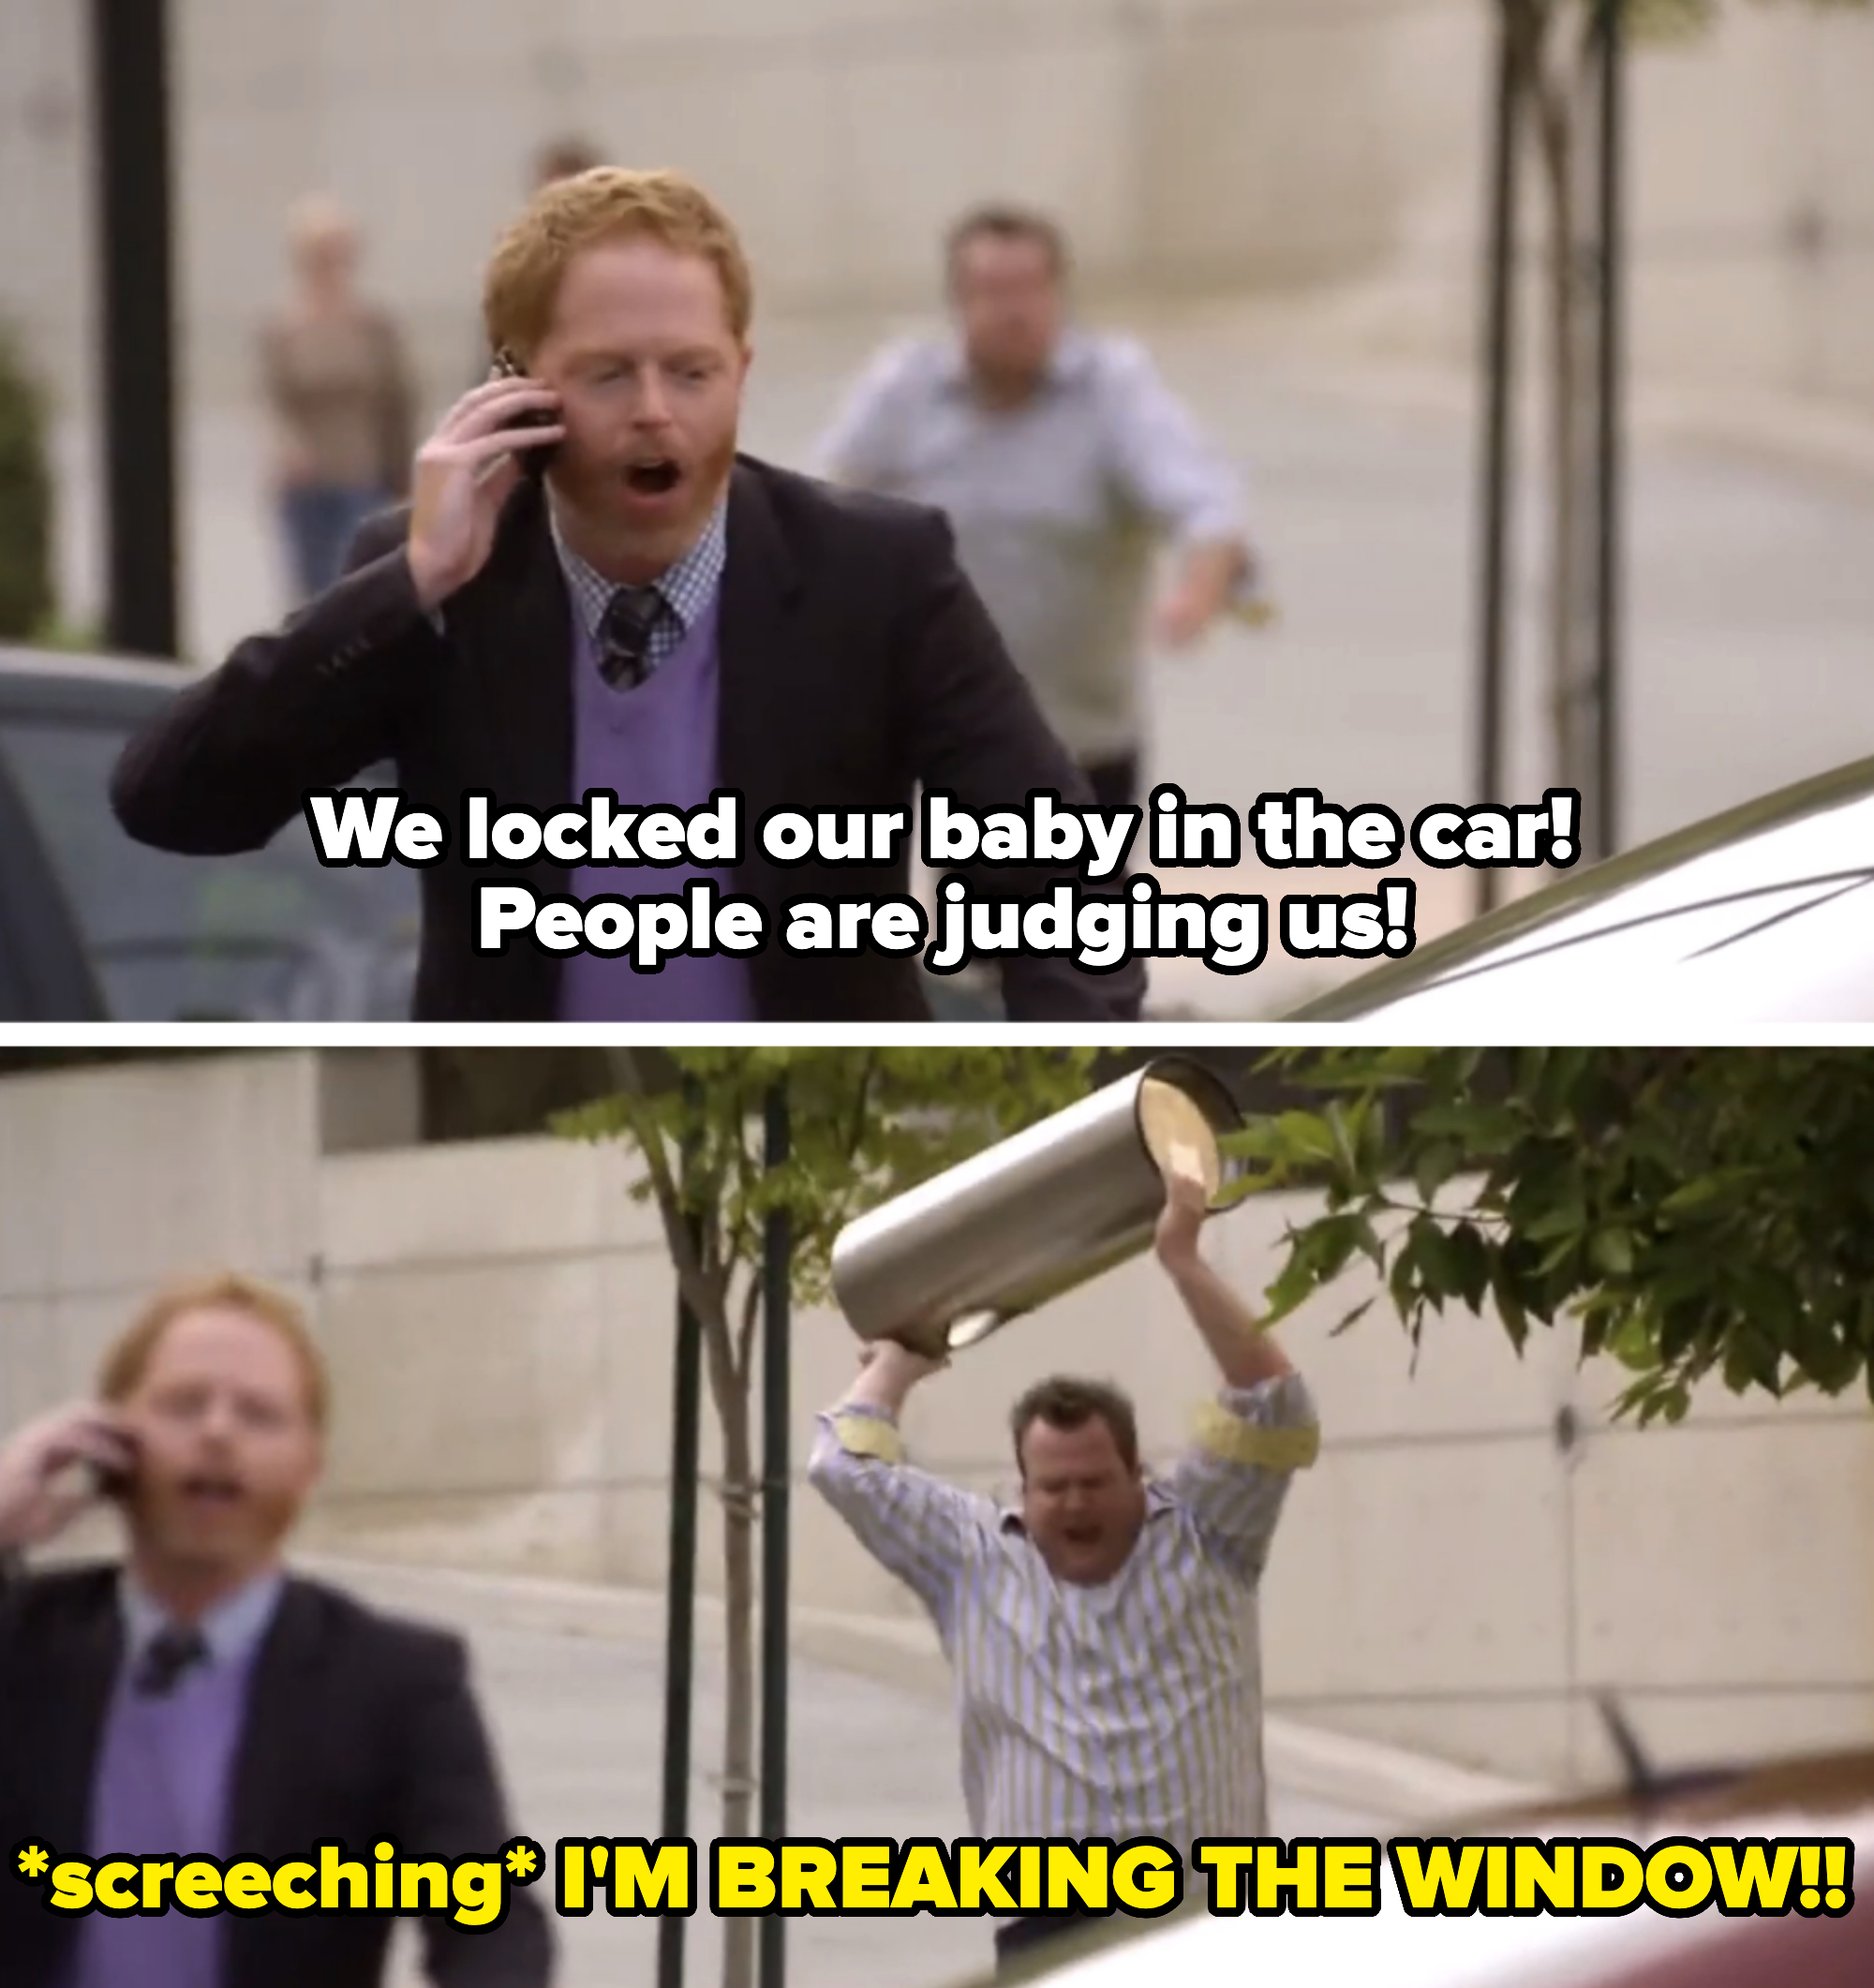 &quot;I&#x27;m breaking the window!!&quot;